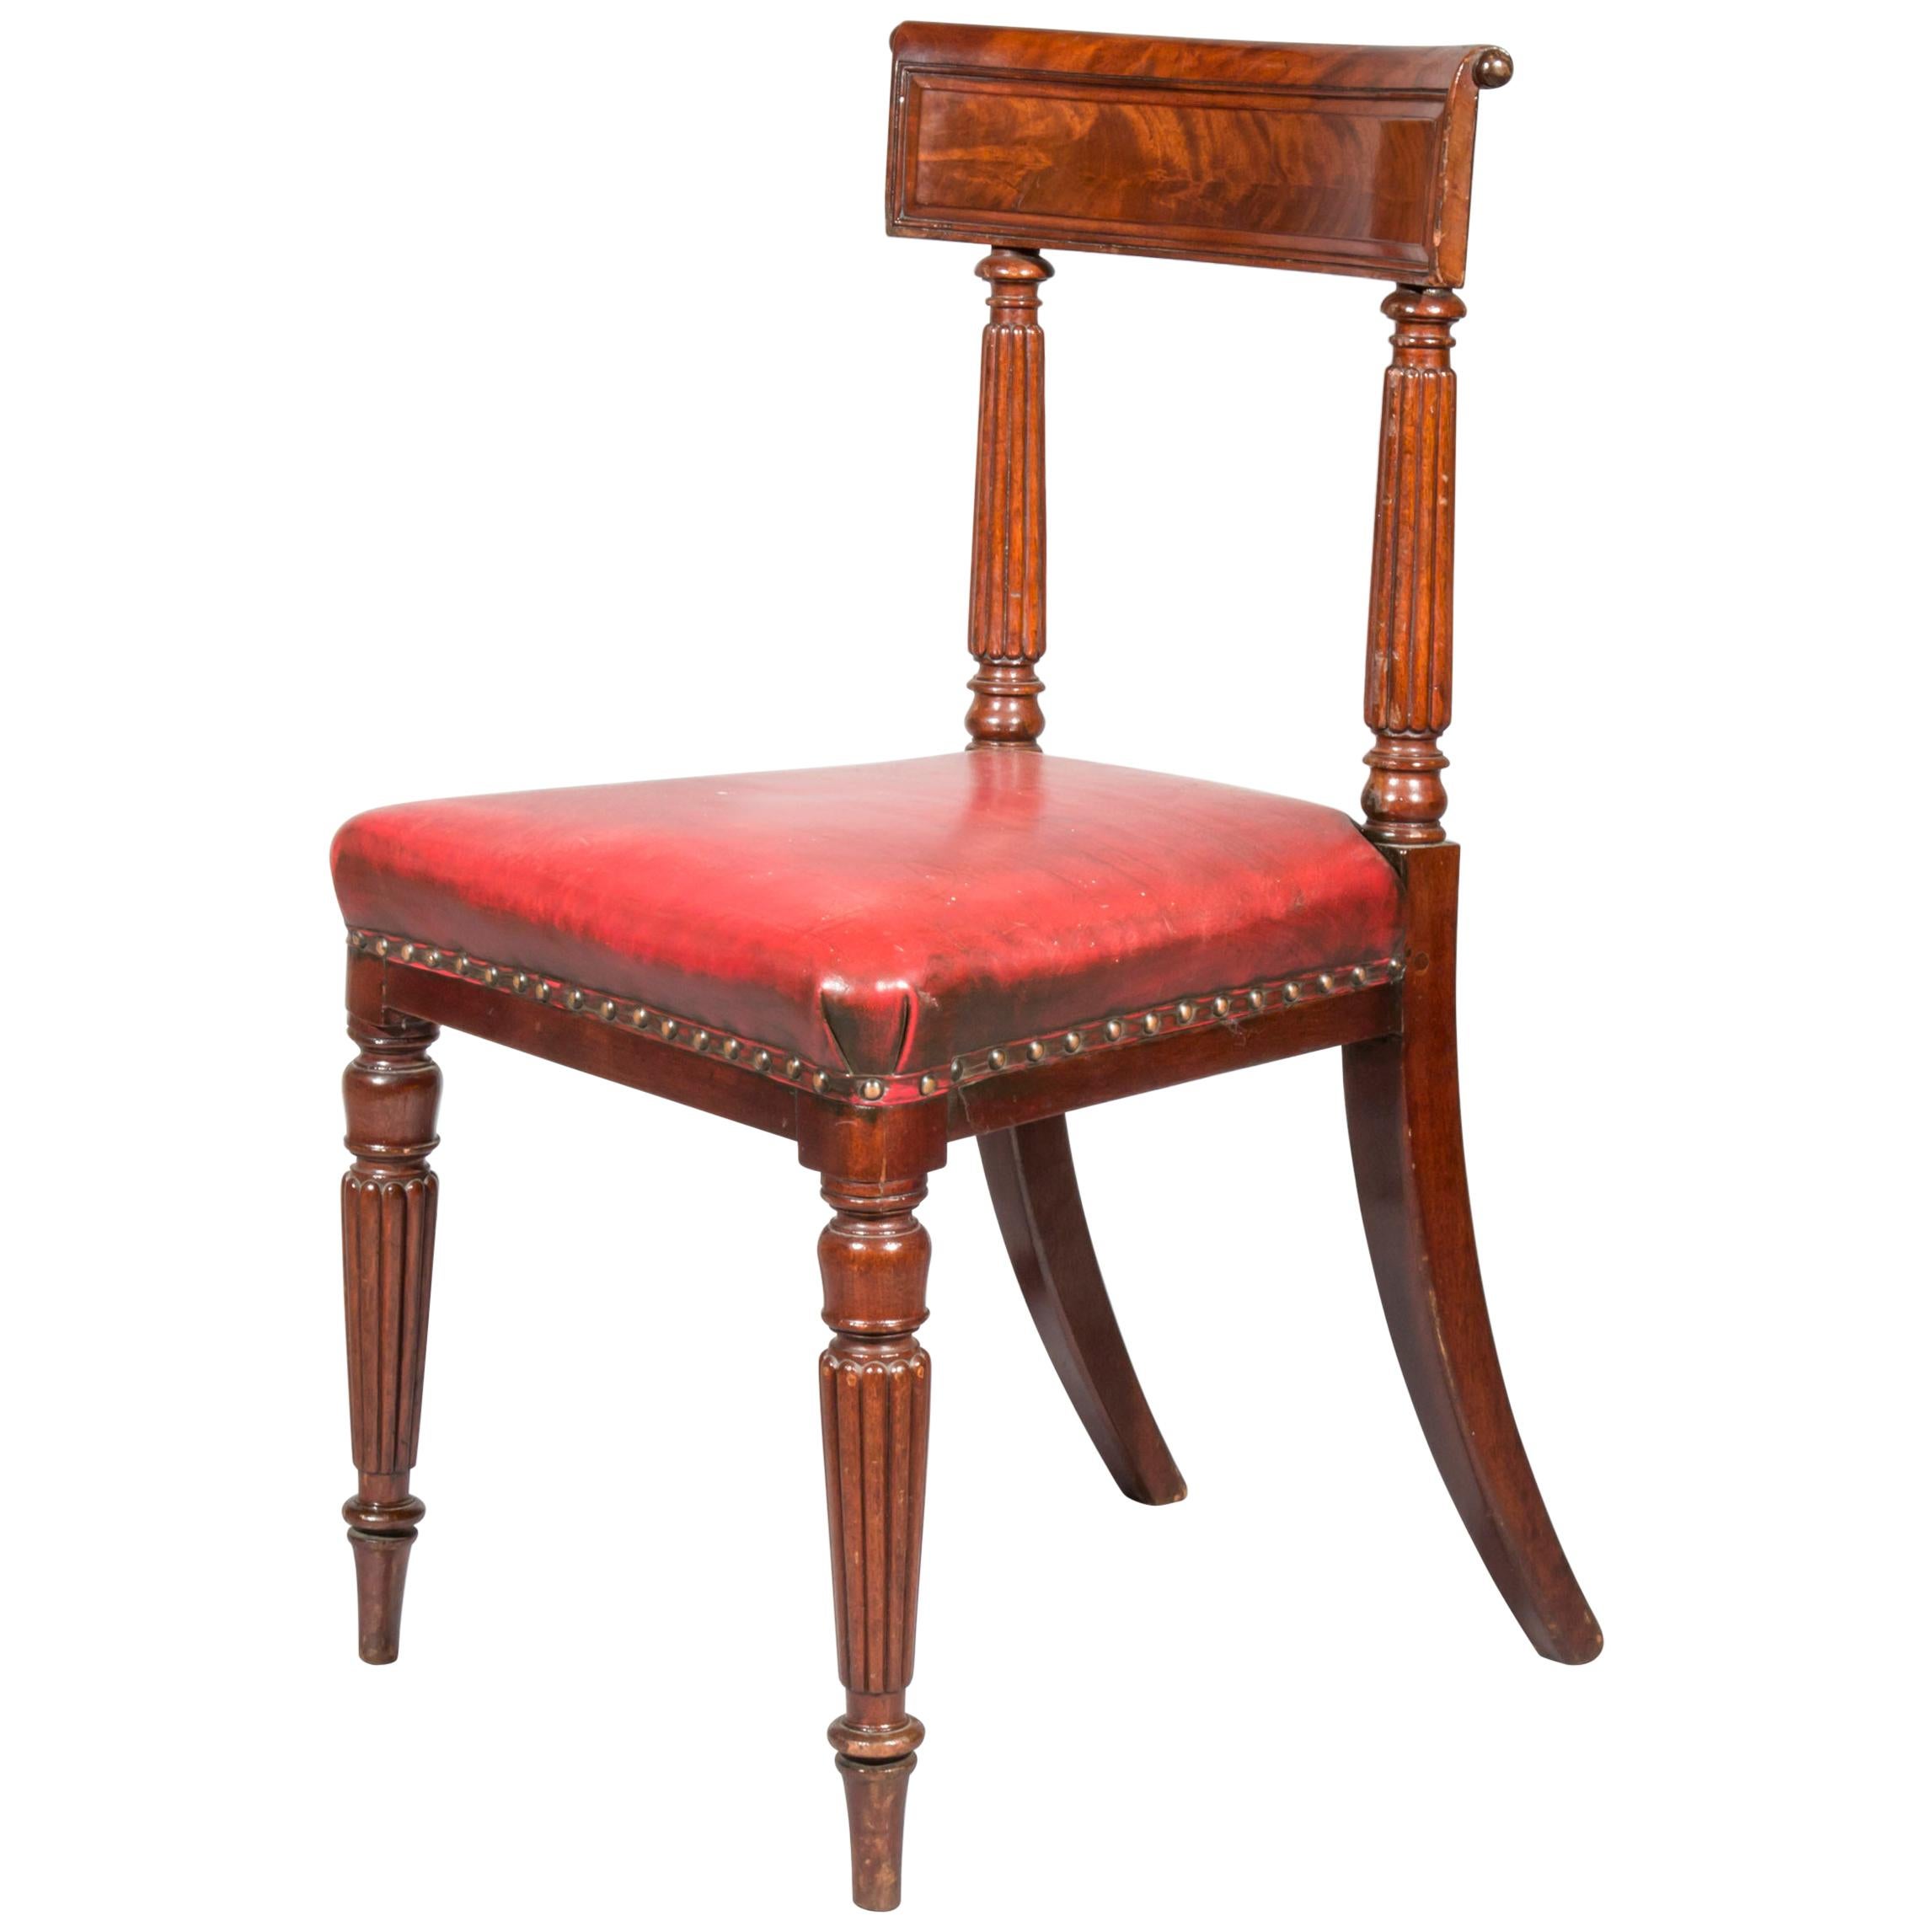 Antique Regency Royal Desk Chair in Burgundy Leather